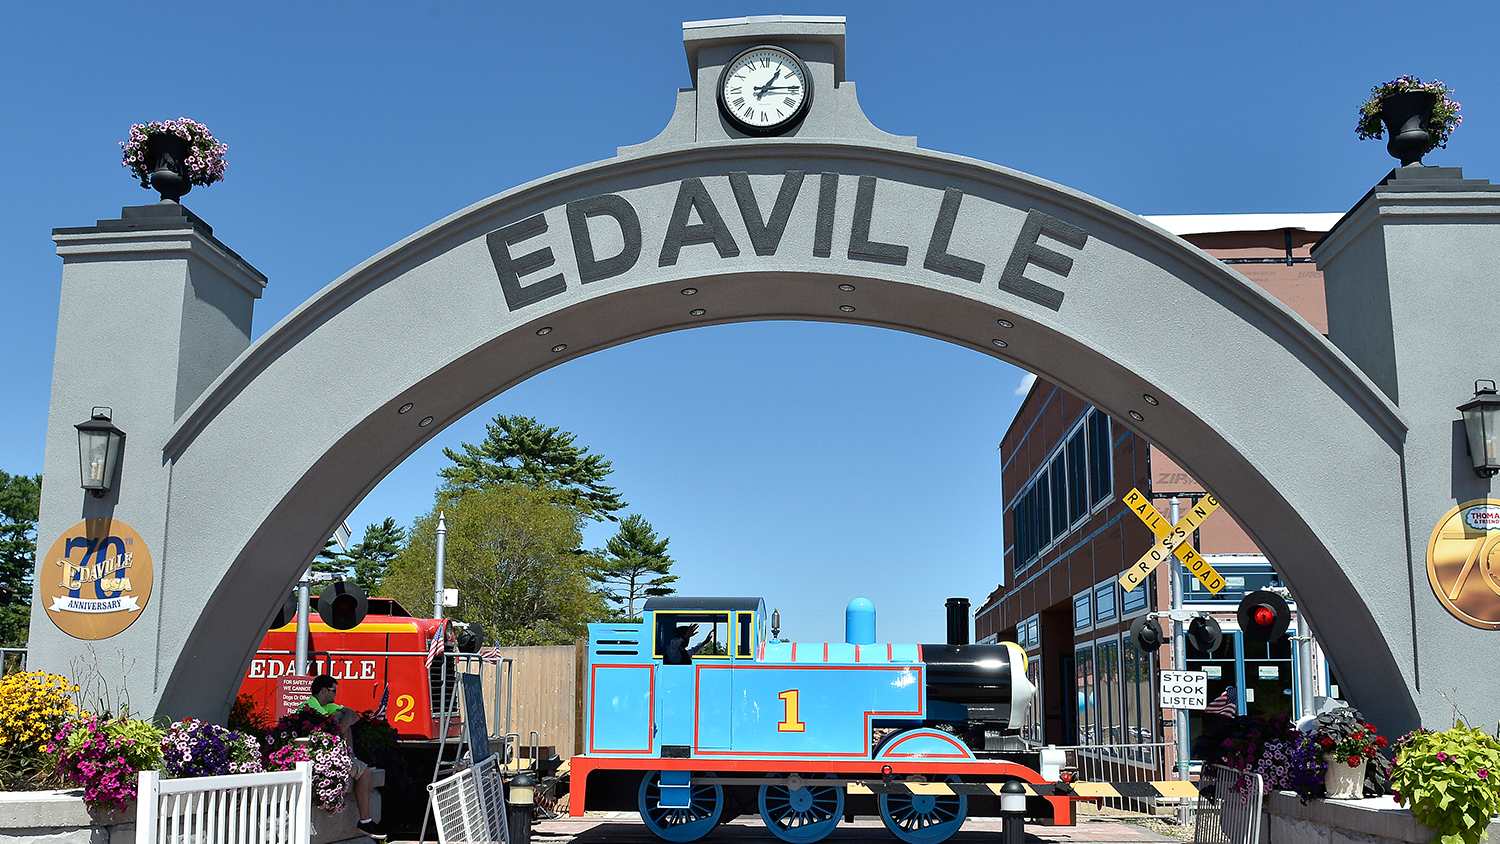 Get a first look inside Thomas Land at Edaville USA